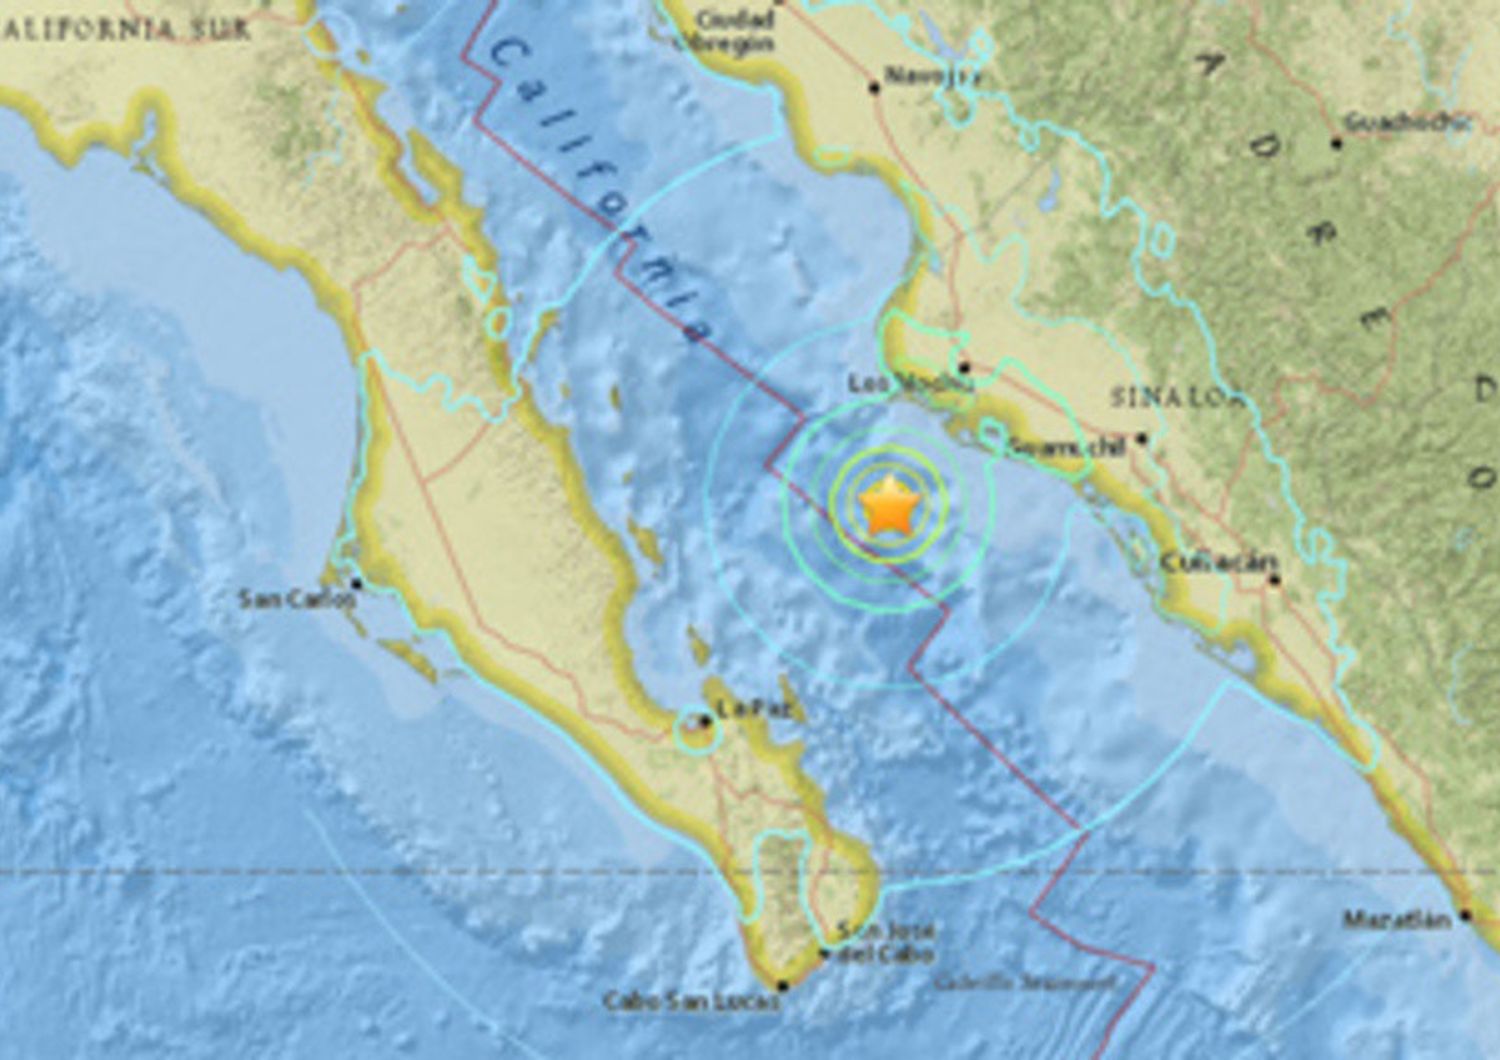 Messico: terremoto magnitudo 6.6 a largo costa nord-ovest